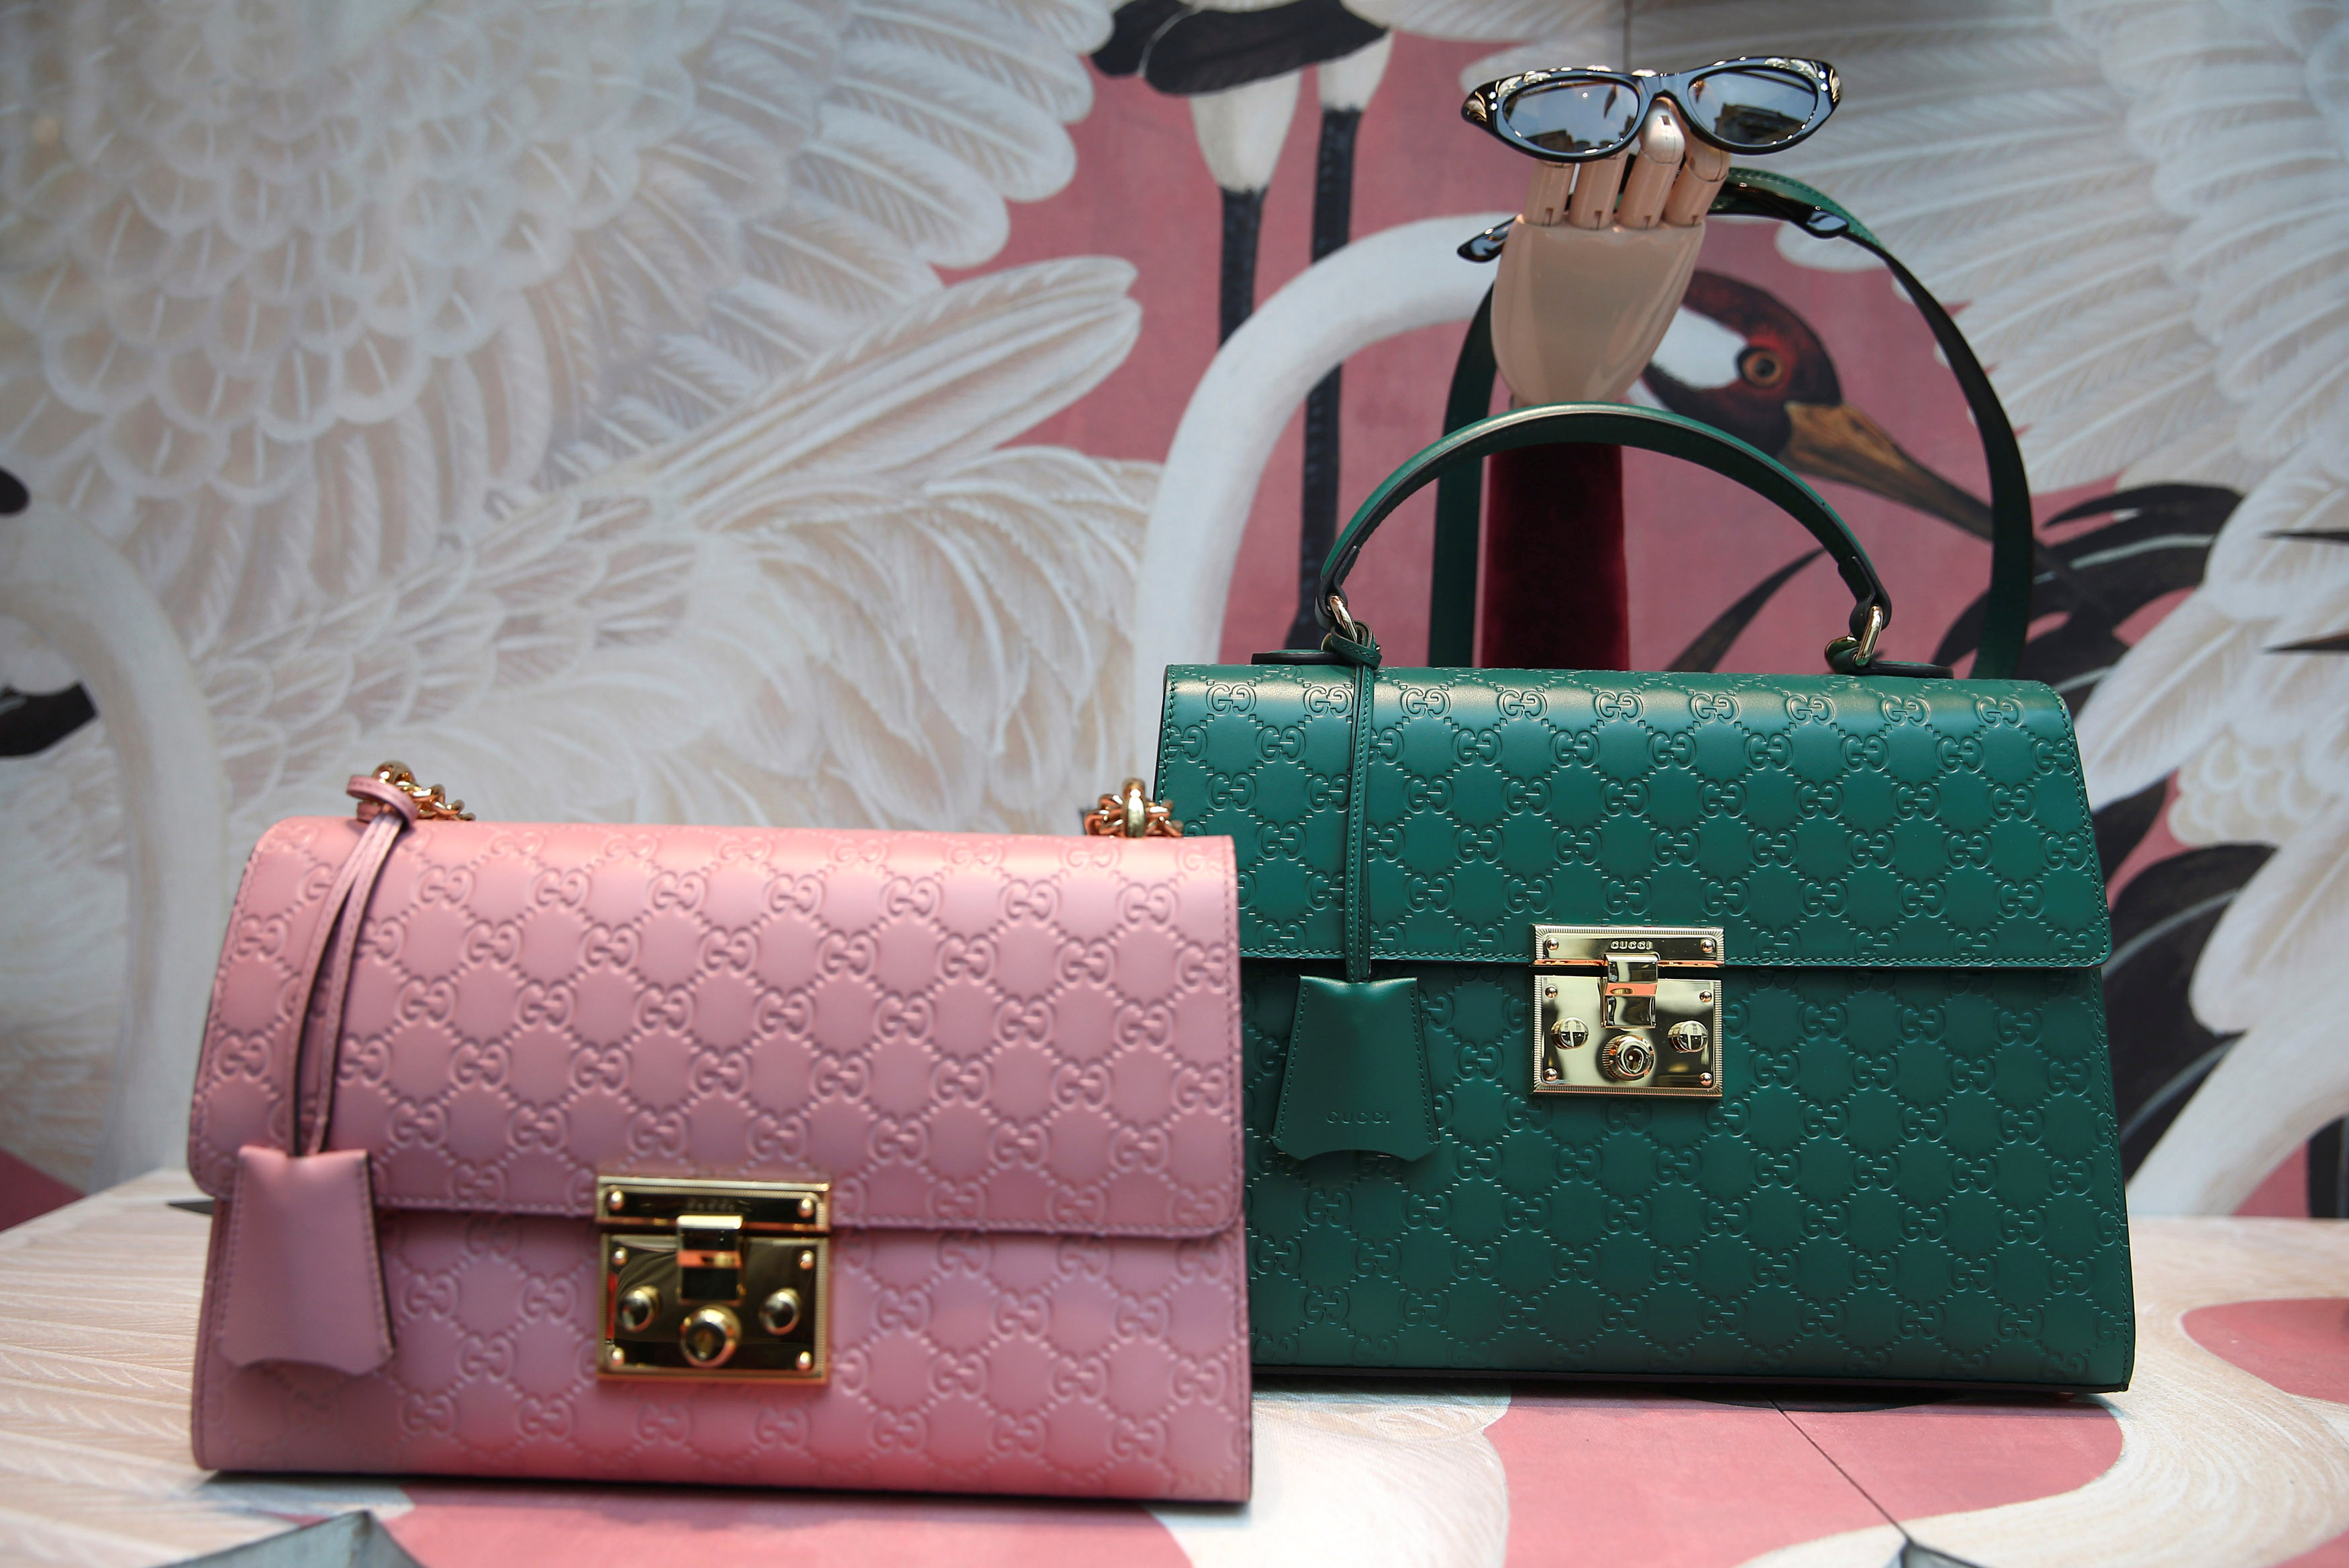 Gucci luxury goods rebound, boosting Kering sales Reuters